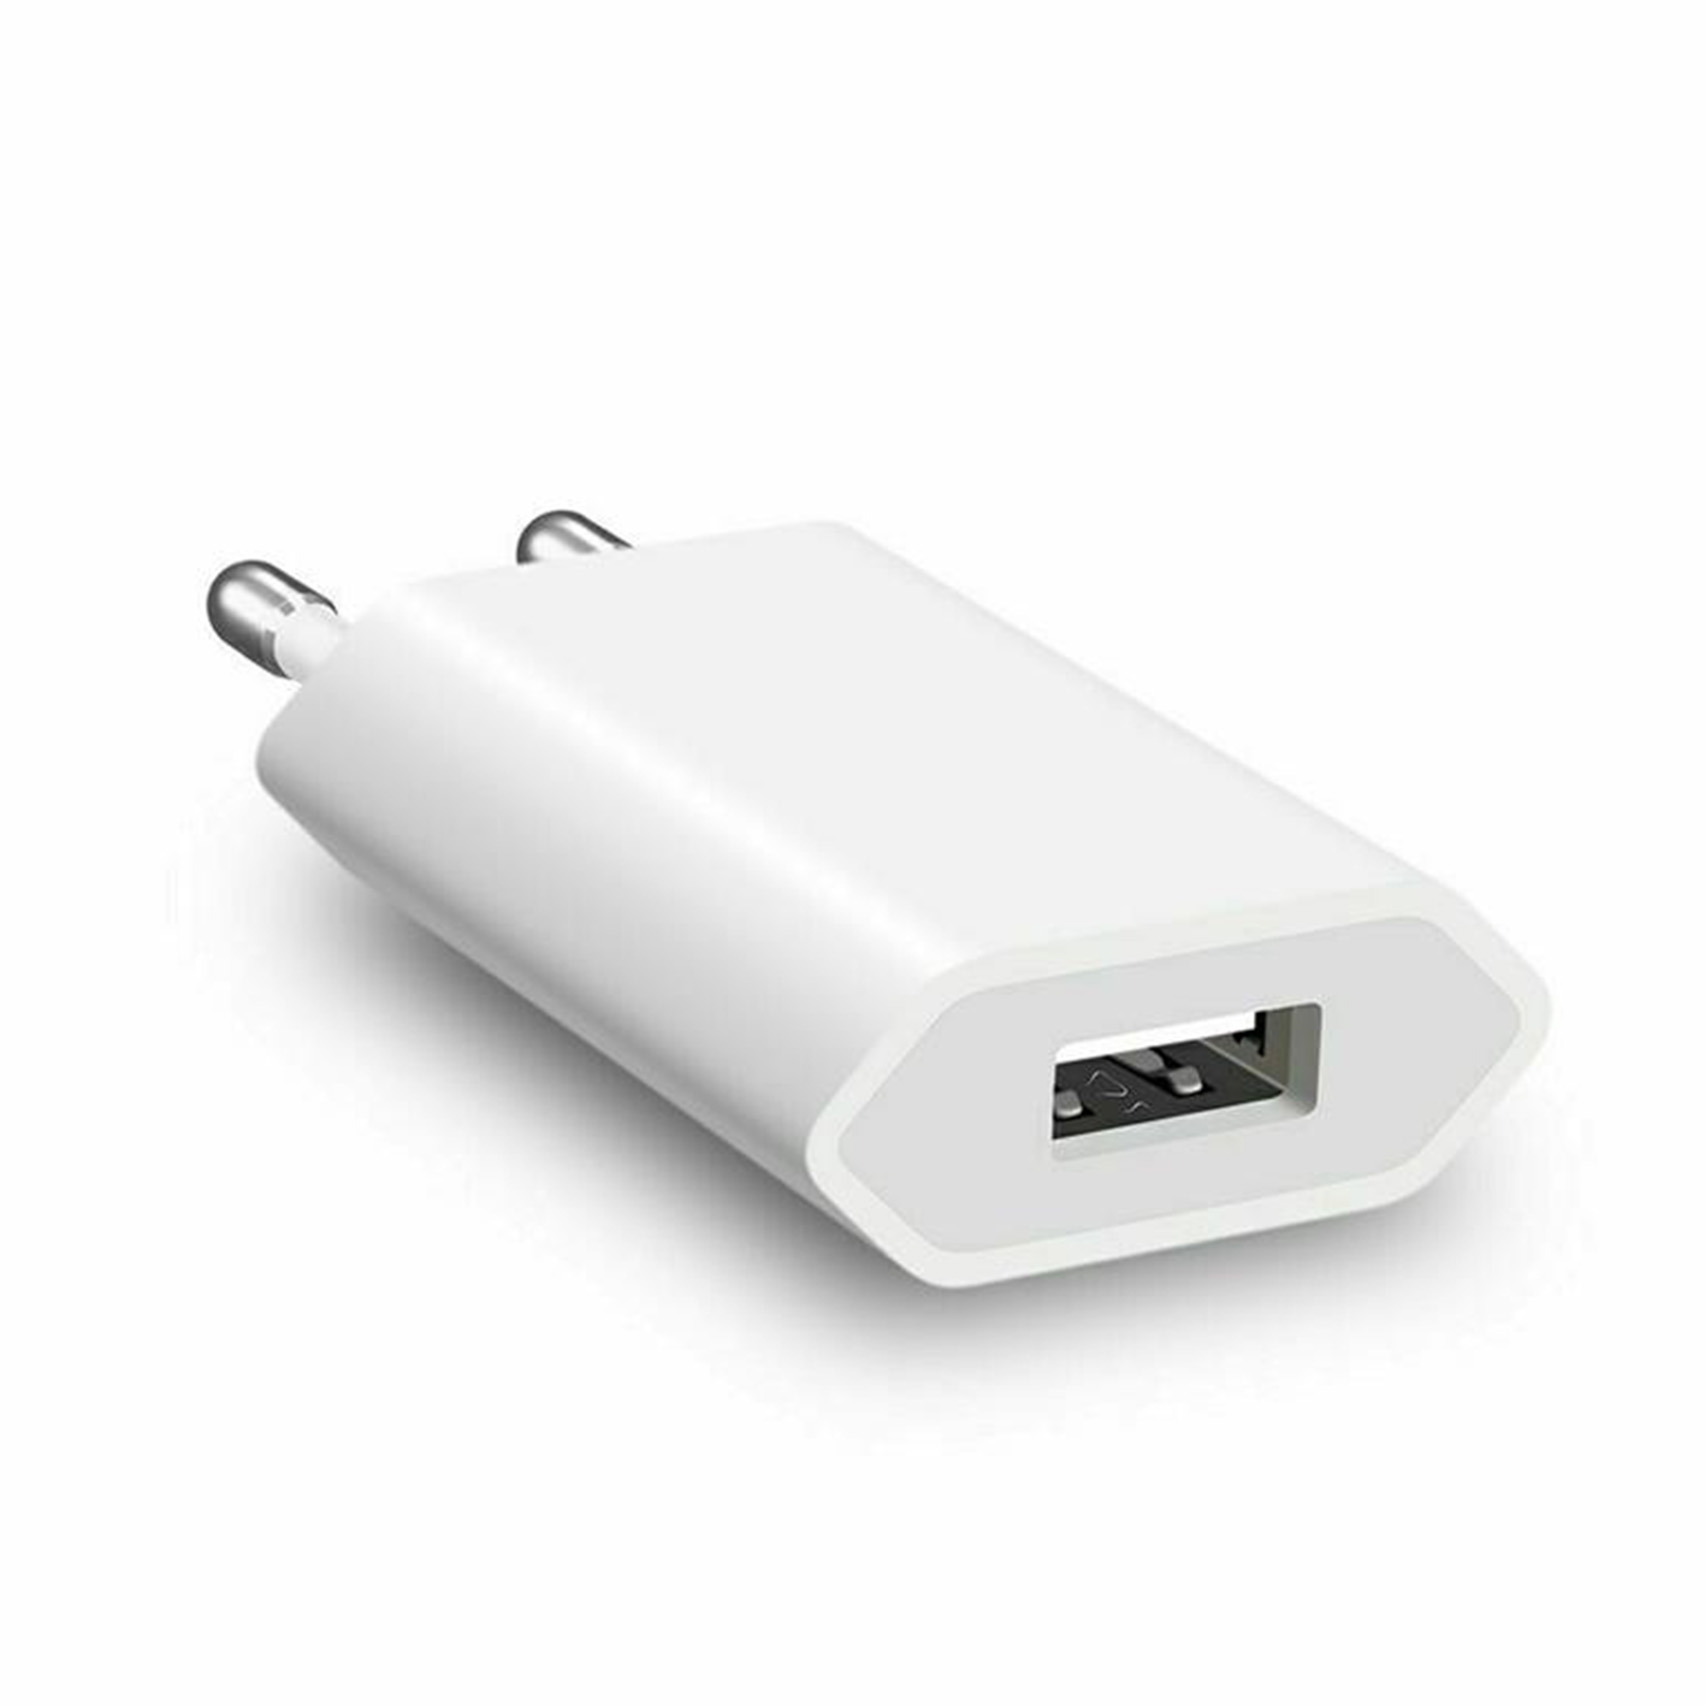 iPhone 8 5W USB Power Adapter